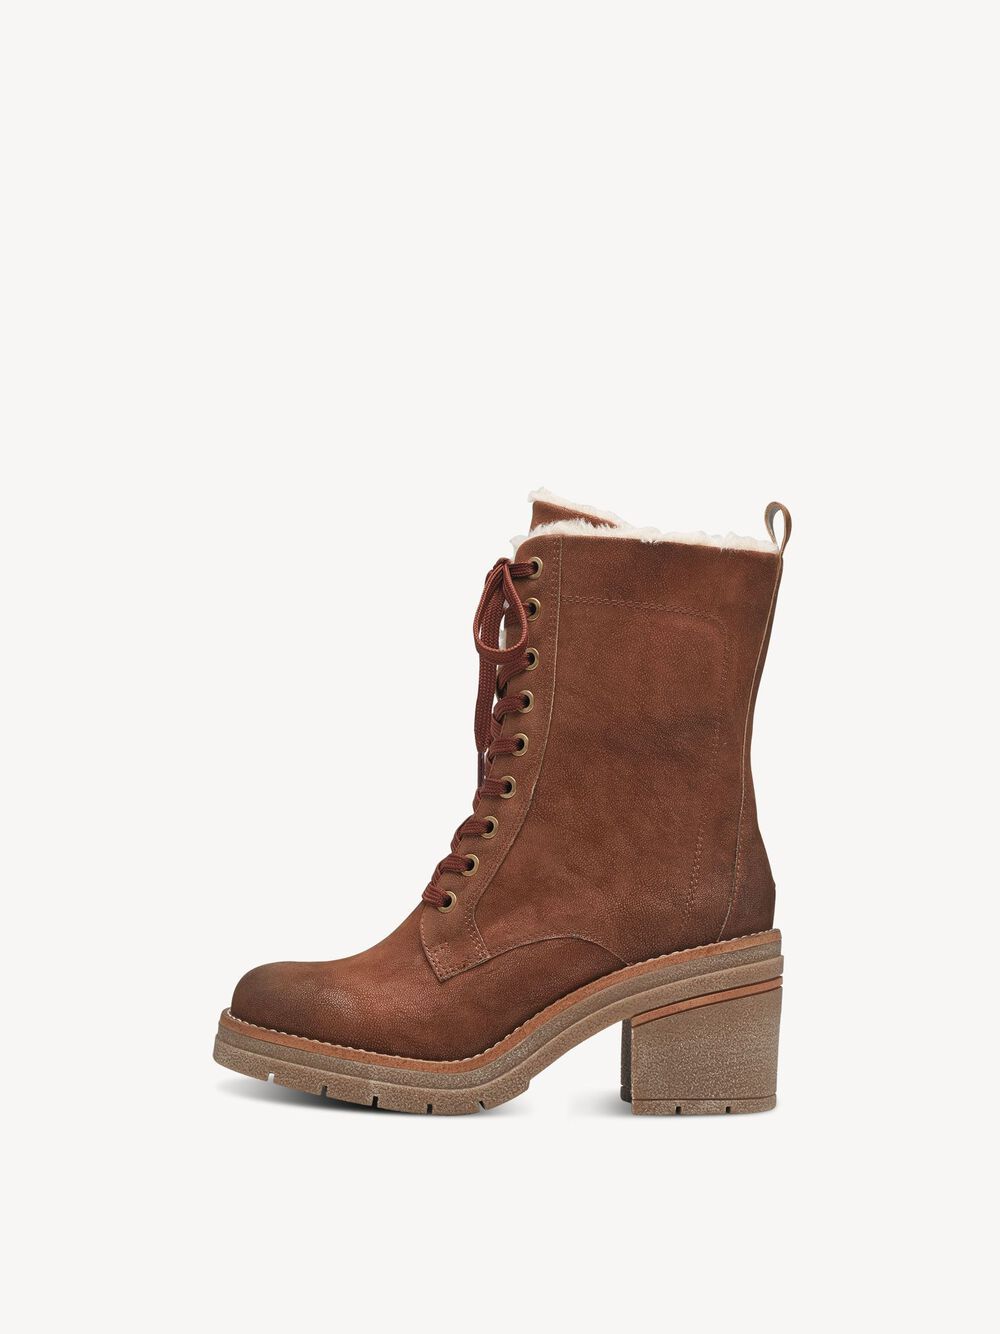 Marco Tozzi nut block heel fleece lined winter boot sizes 4-9